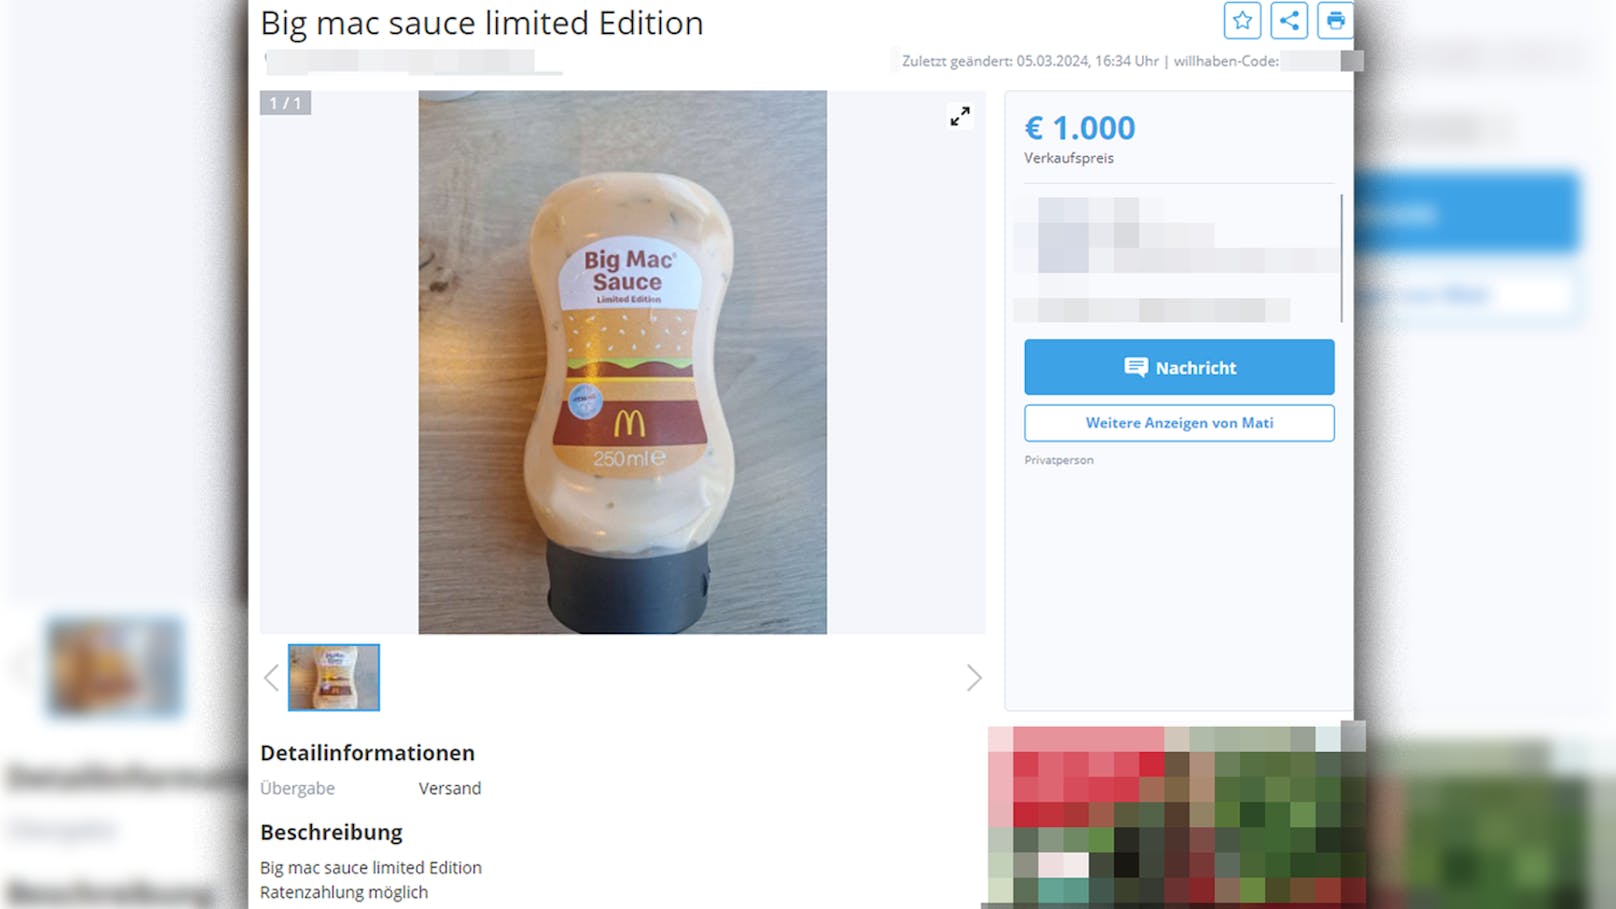 Wiener verlangt 1.000 Euro für limitierte Big-Mac-Sauce